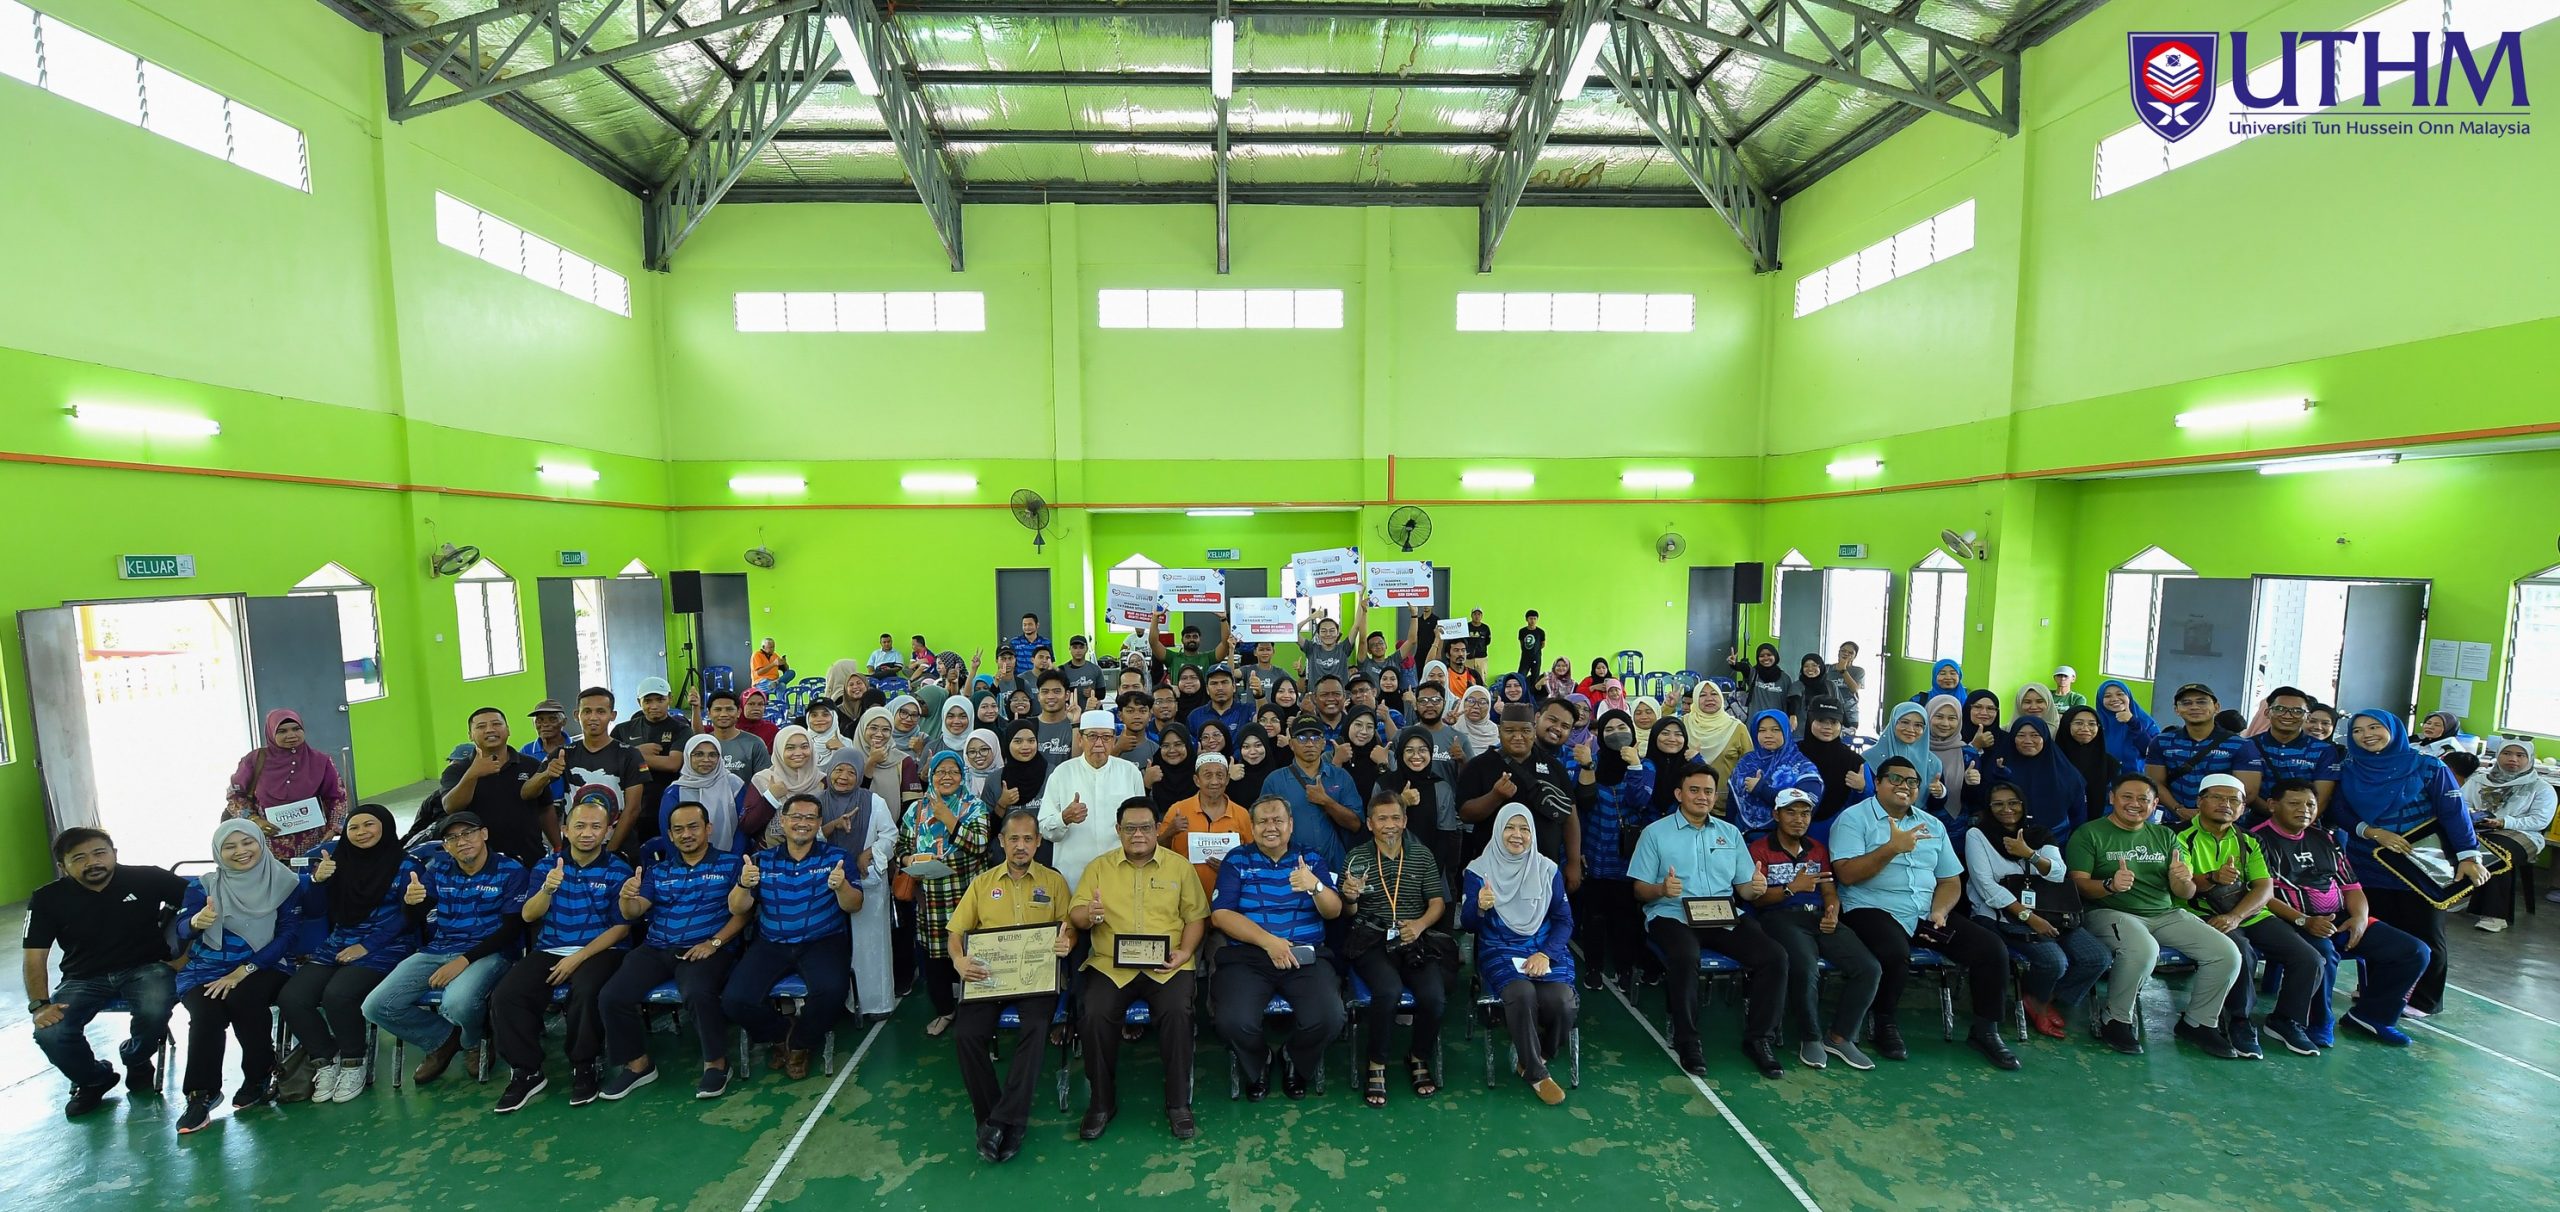 100 UTHM Volunteers Engaged in UTHM Care and Johore Media CSR Programme